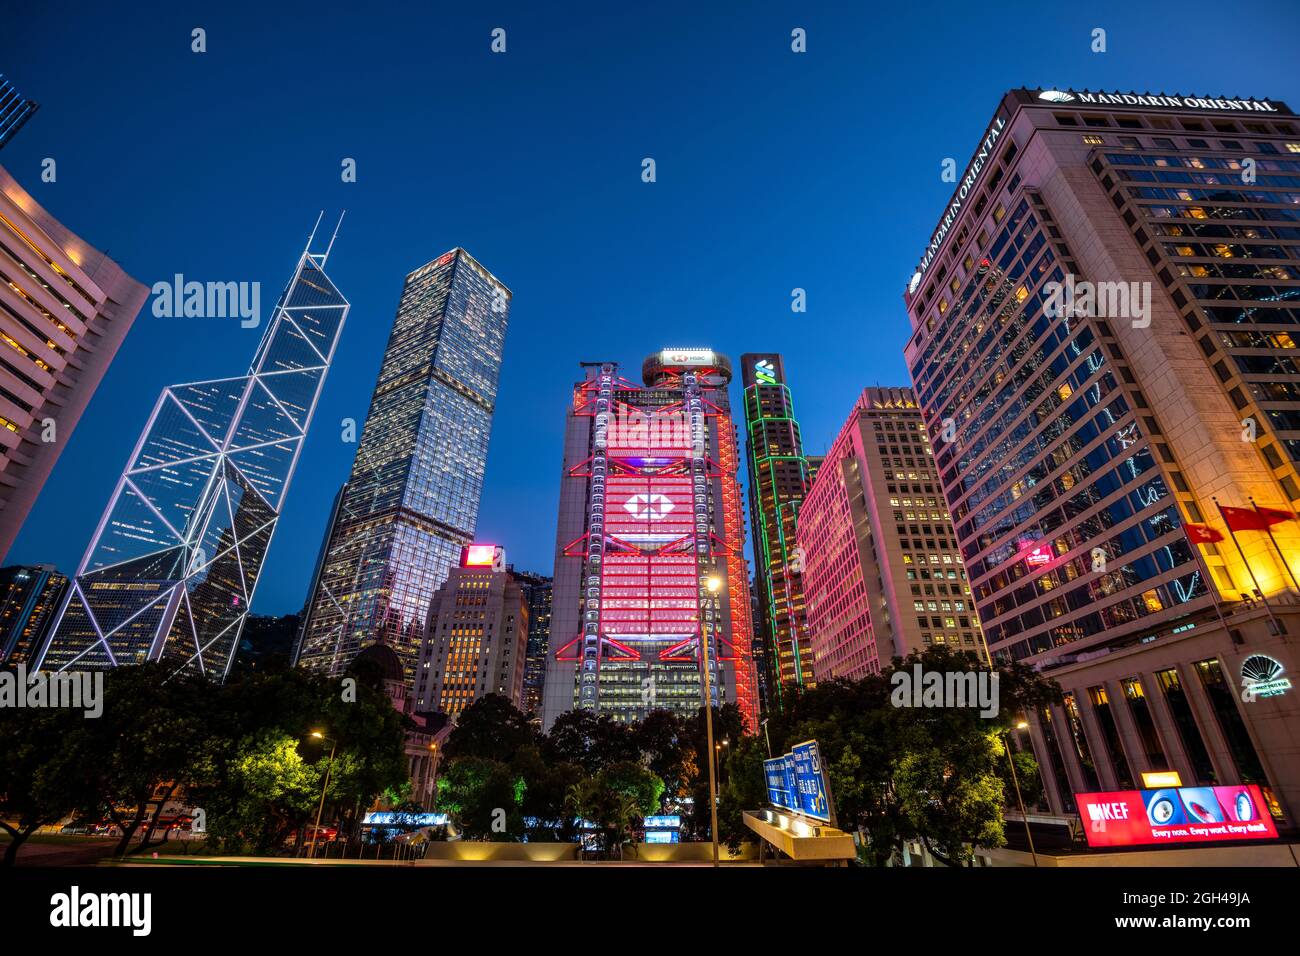 Die Bank von Hongkong und Shanghai, HSBC, und die Bank of China, Standard Chartered Bank, Central Financial District, Hongkong, China. Stockfoto